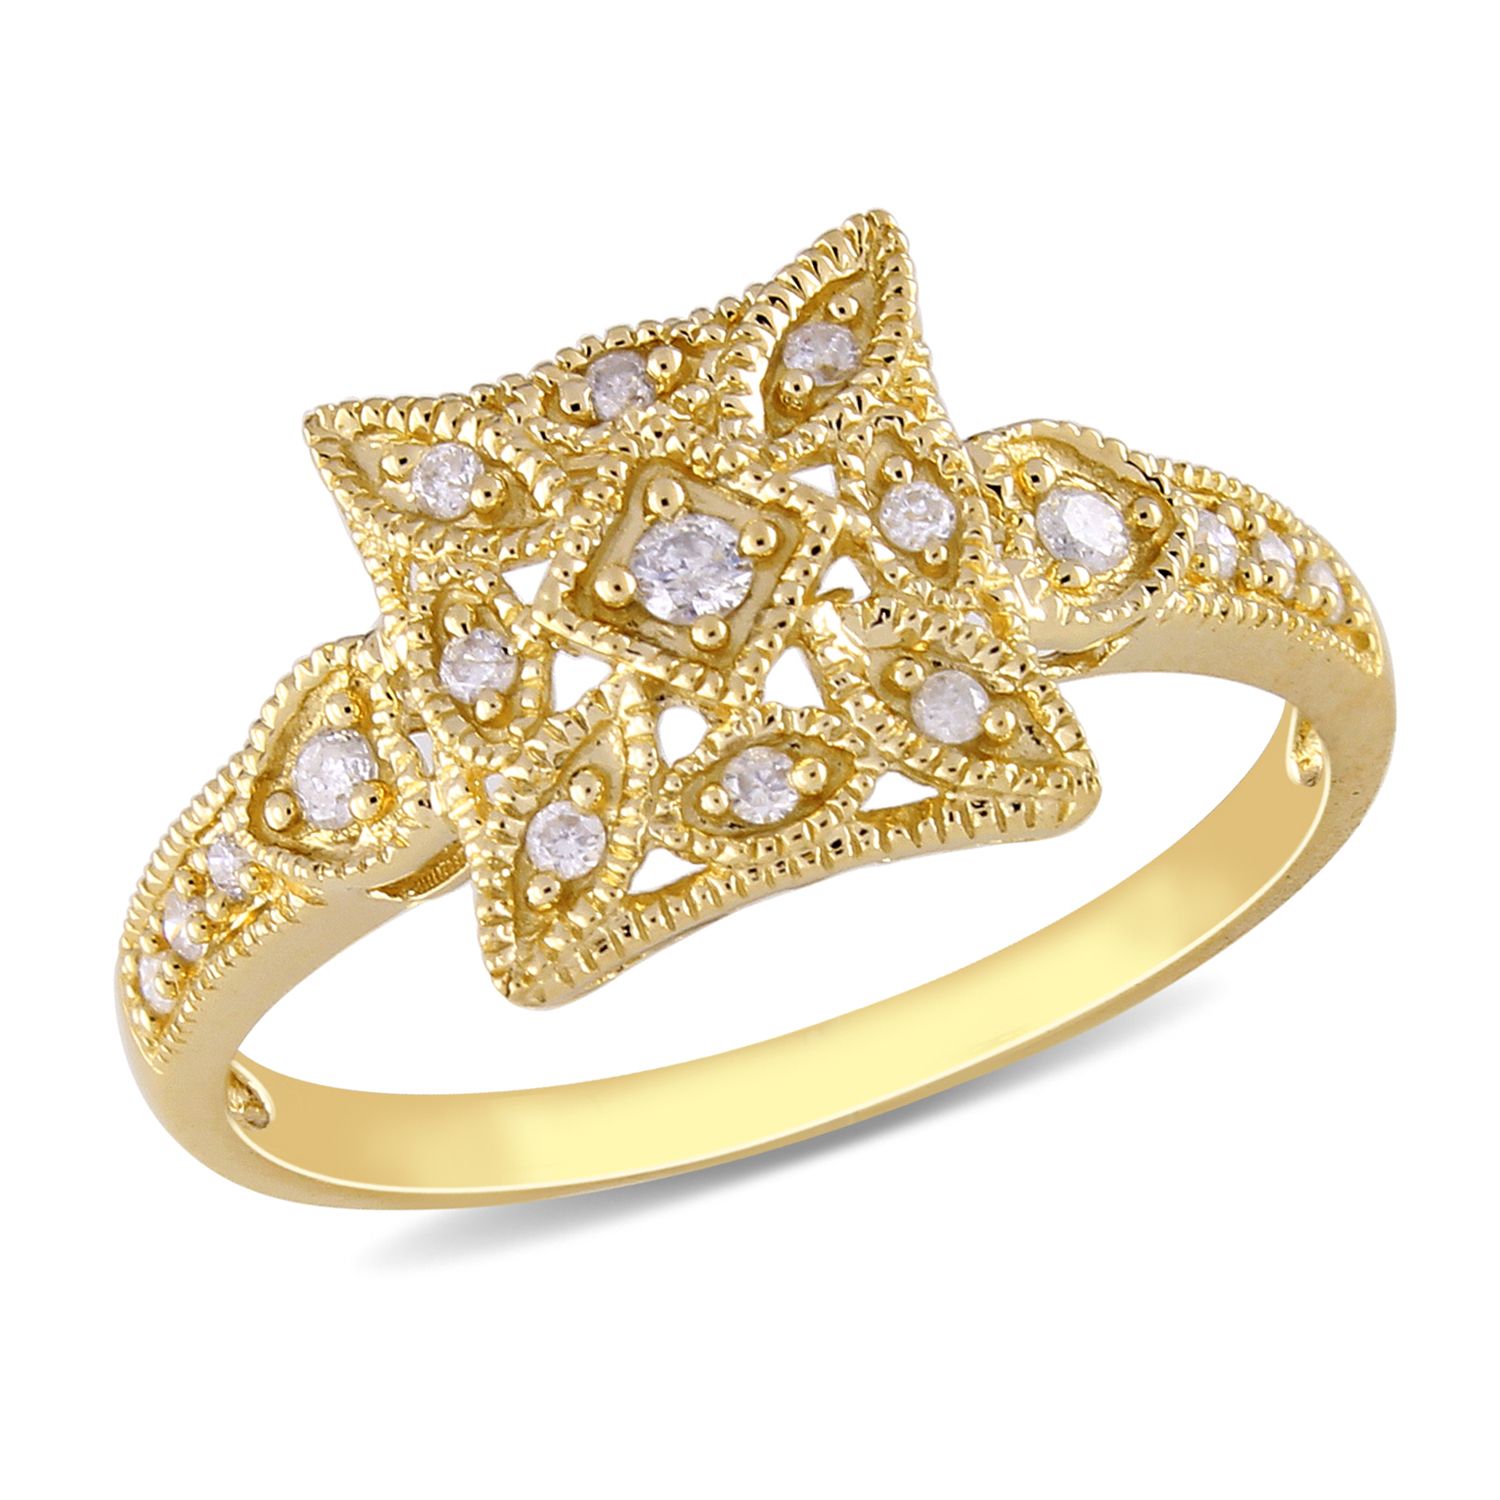 1/7 CTTW Diamond Fashion Ring Set in 10K Yellow Gold (GH I2;I3)